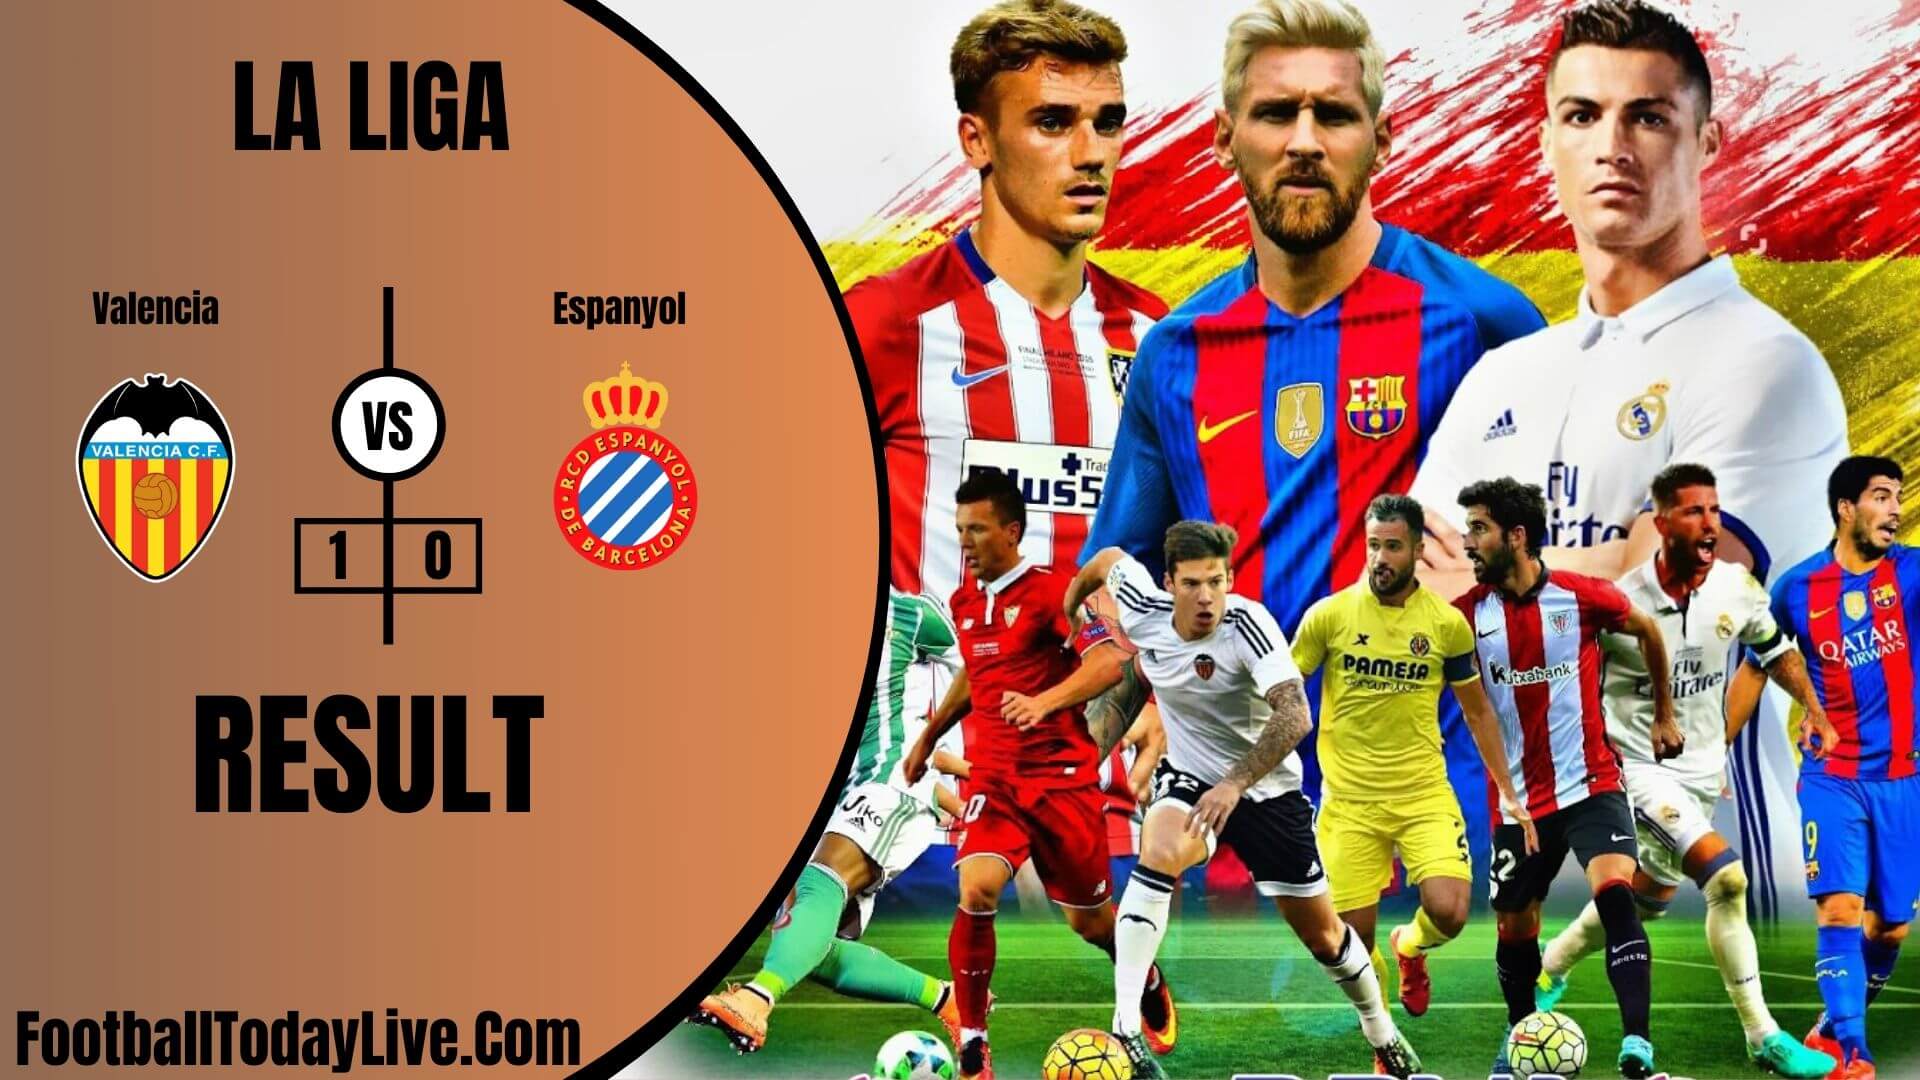 Valencia Vs Espanyol | La Liga Week 37 Result 2020